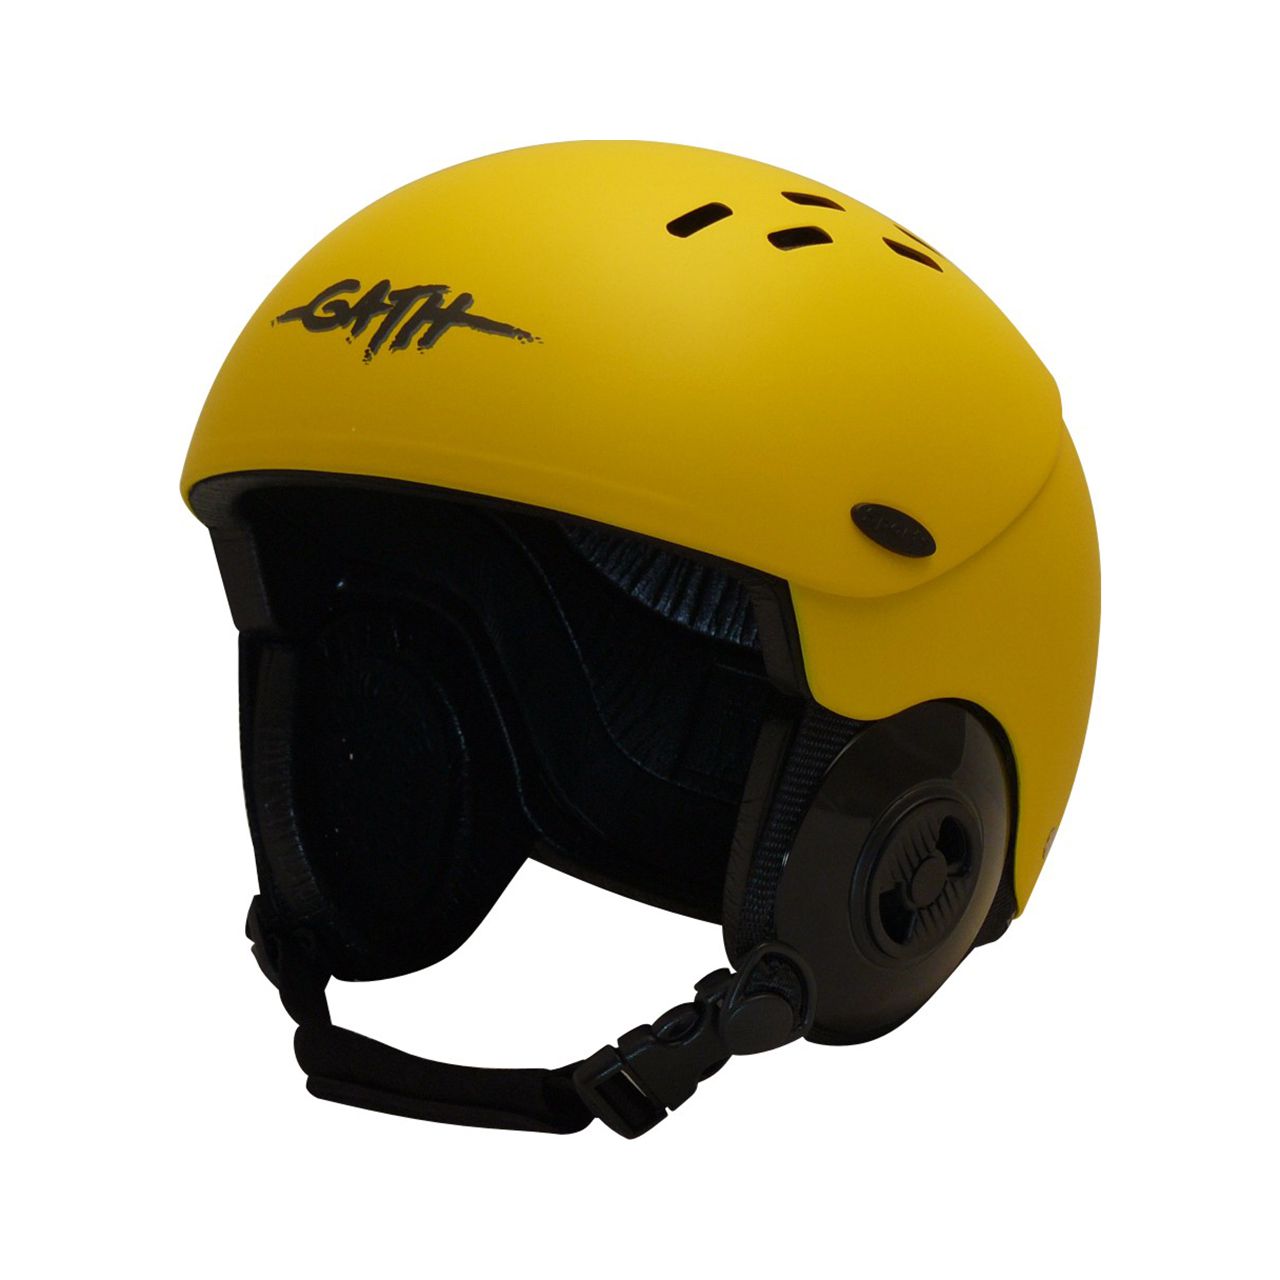 Gath Gedi Surf Safety Helmet with Peak 